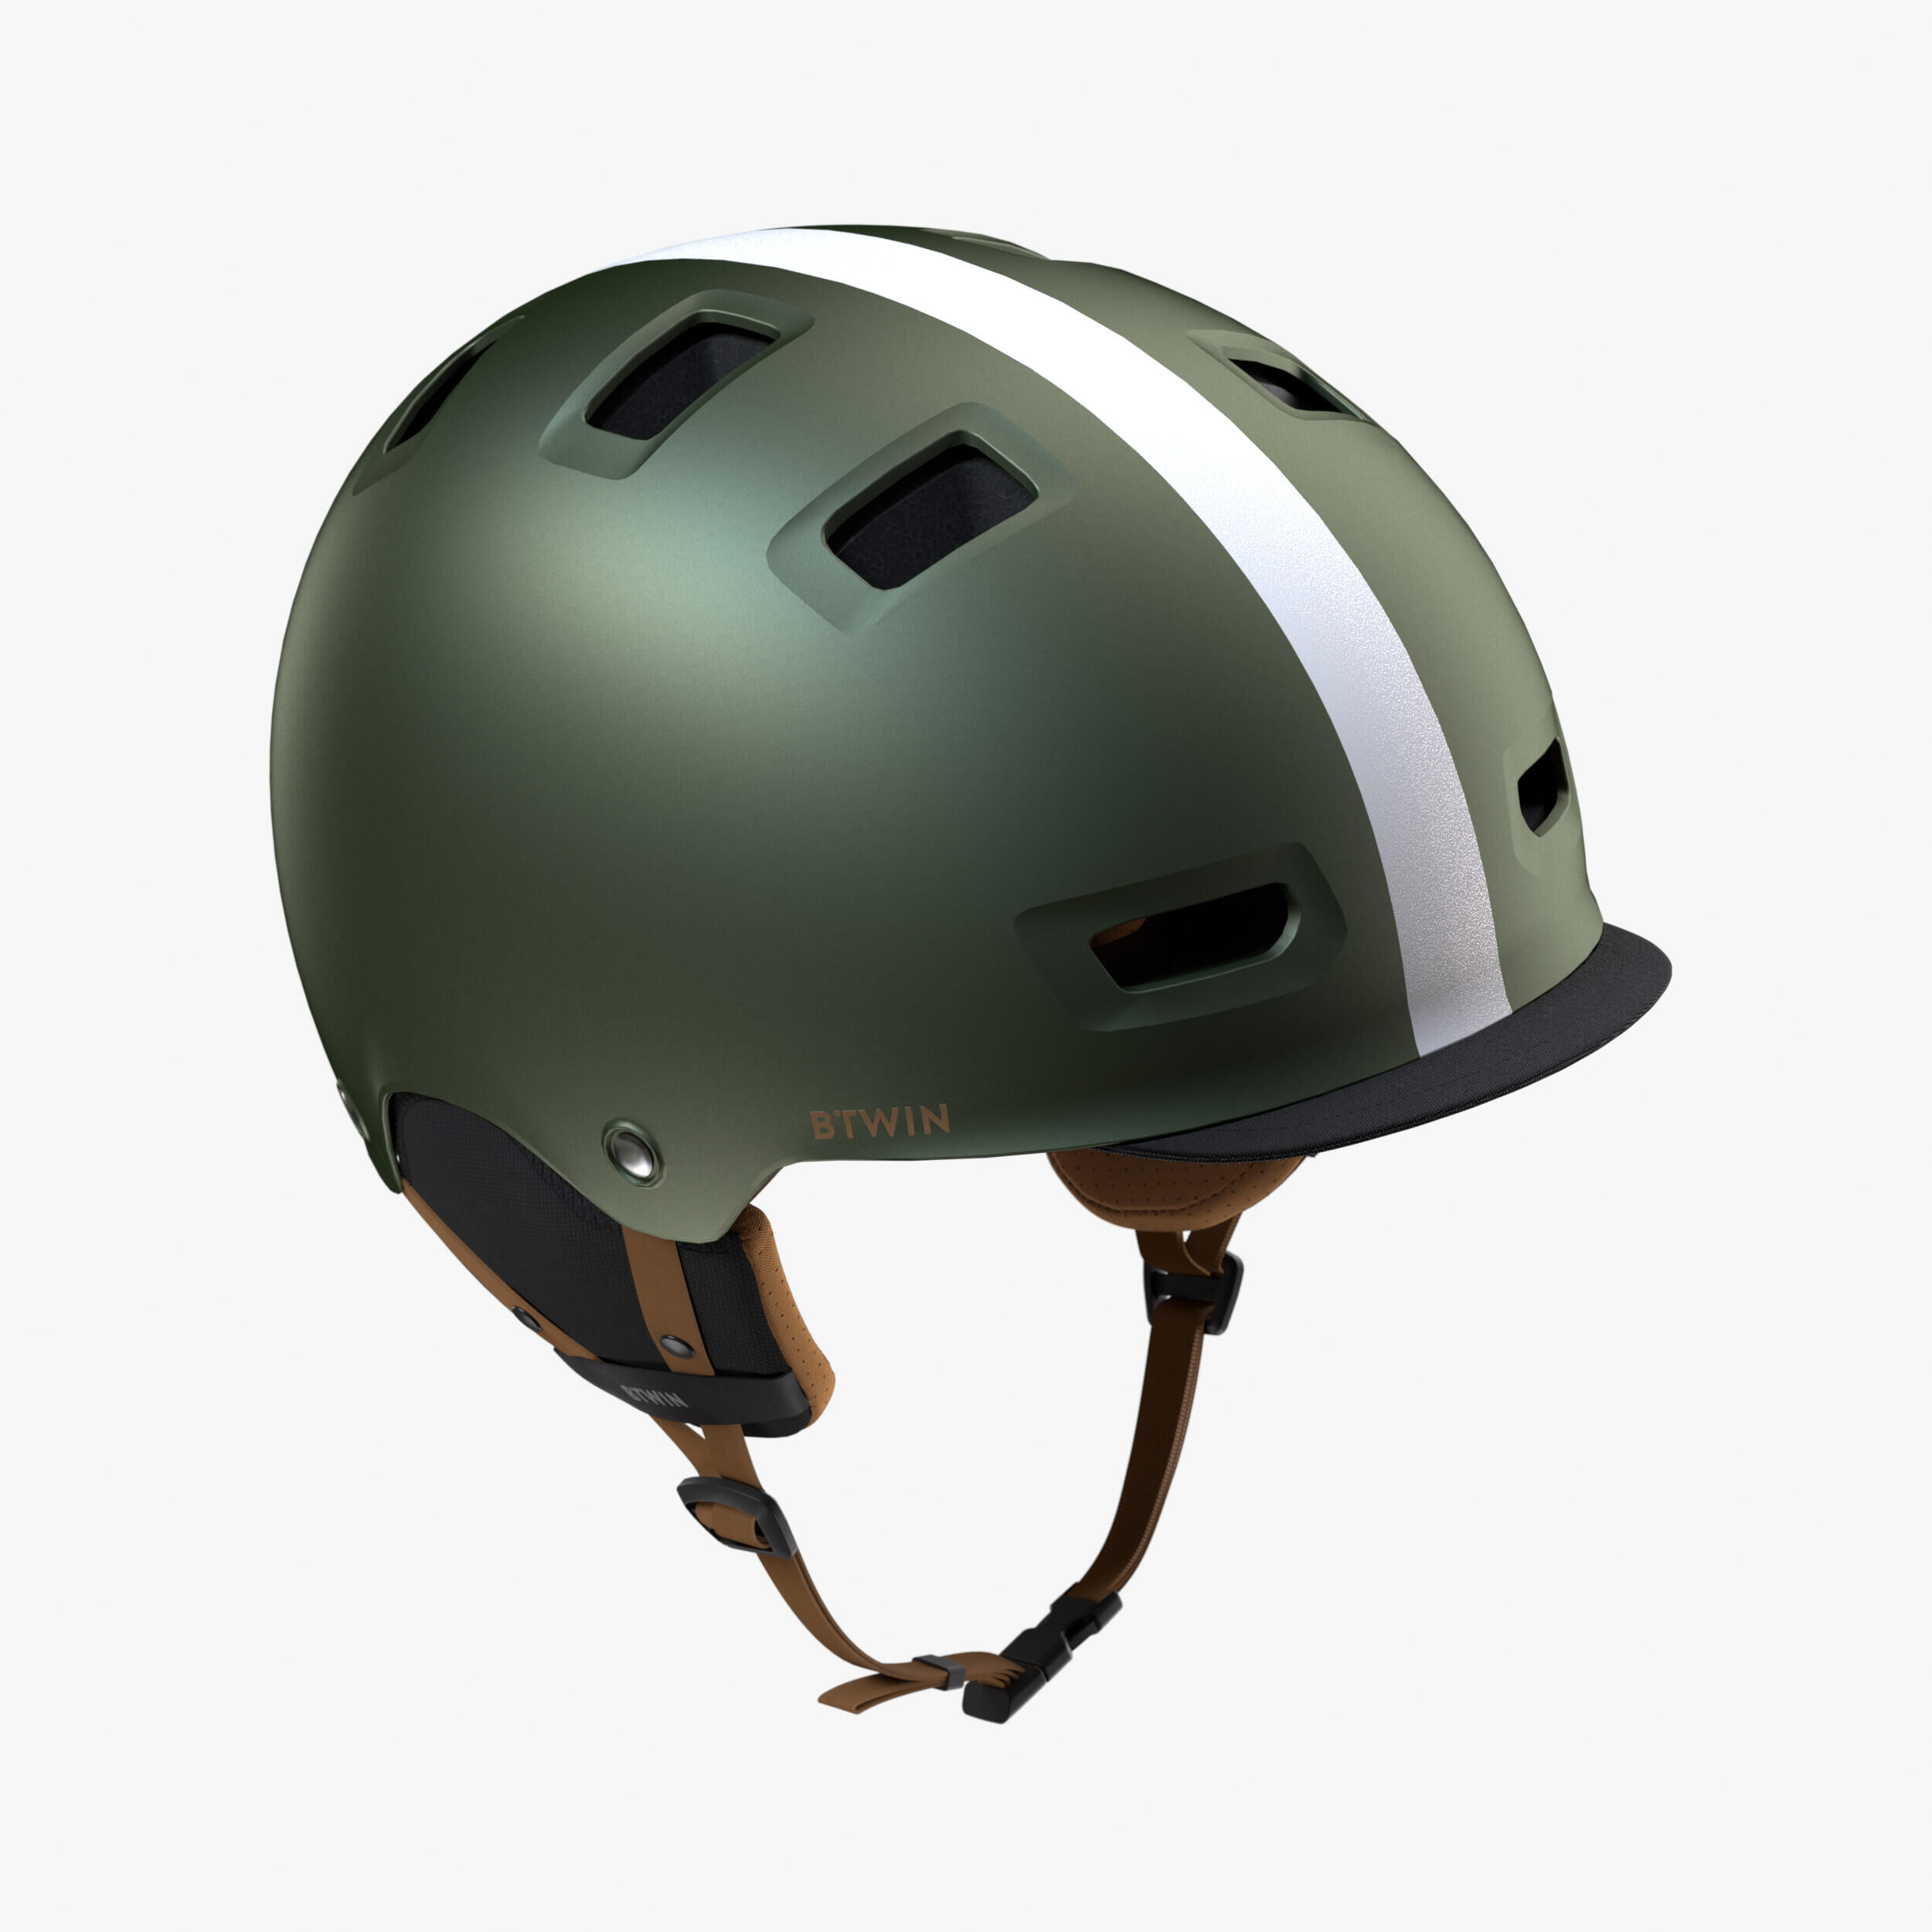 BTWIN City Cycling Bowl Helmet 540 - Khaki